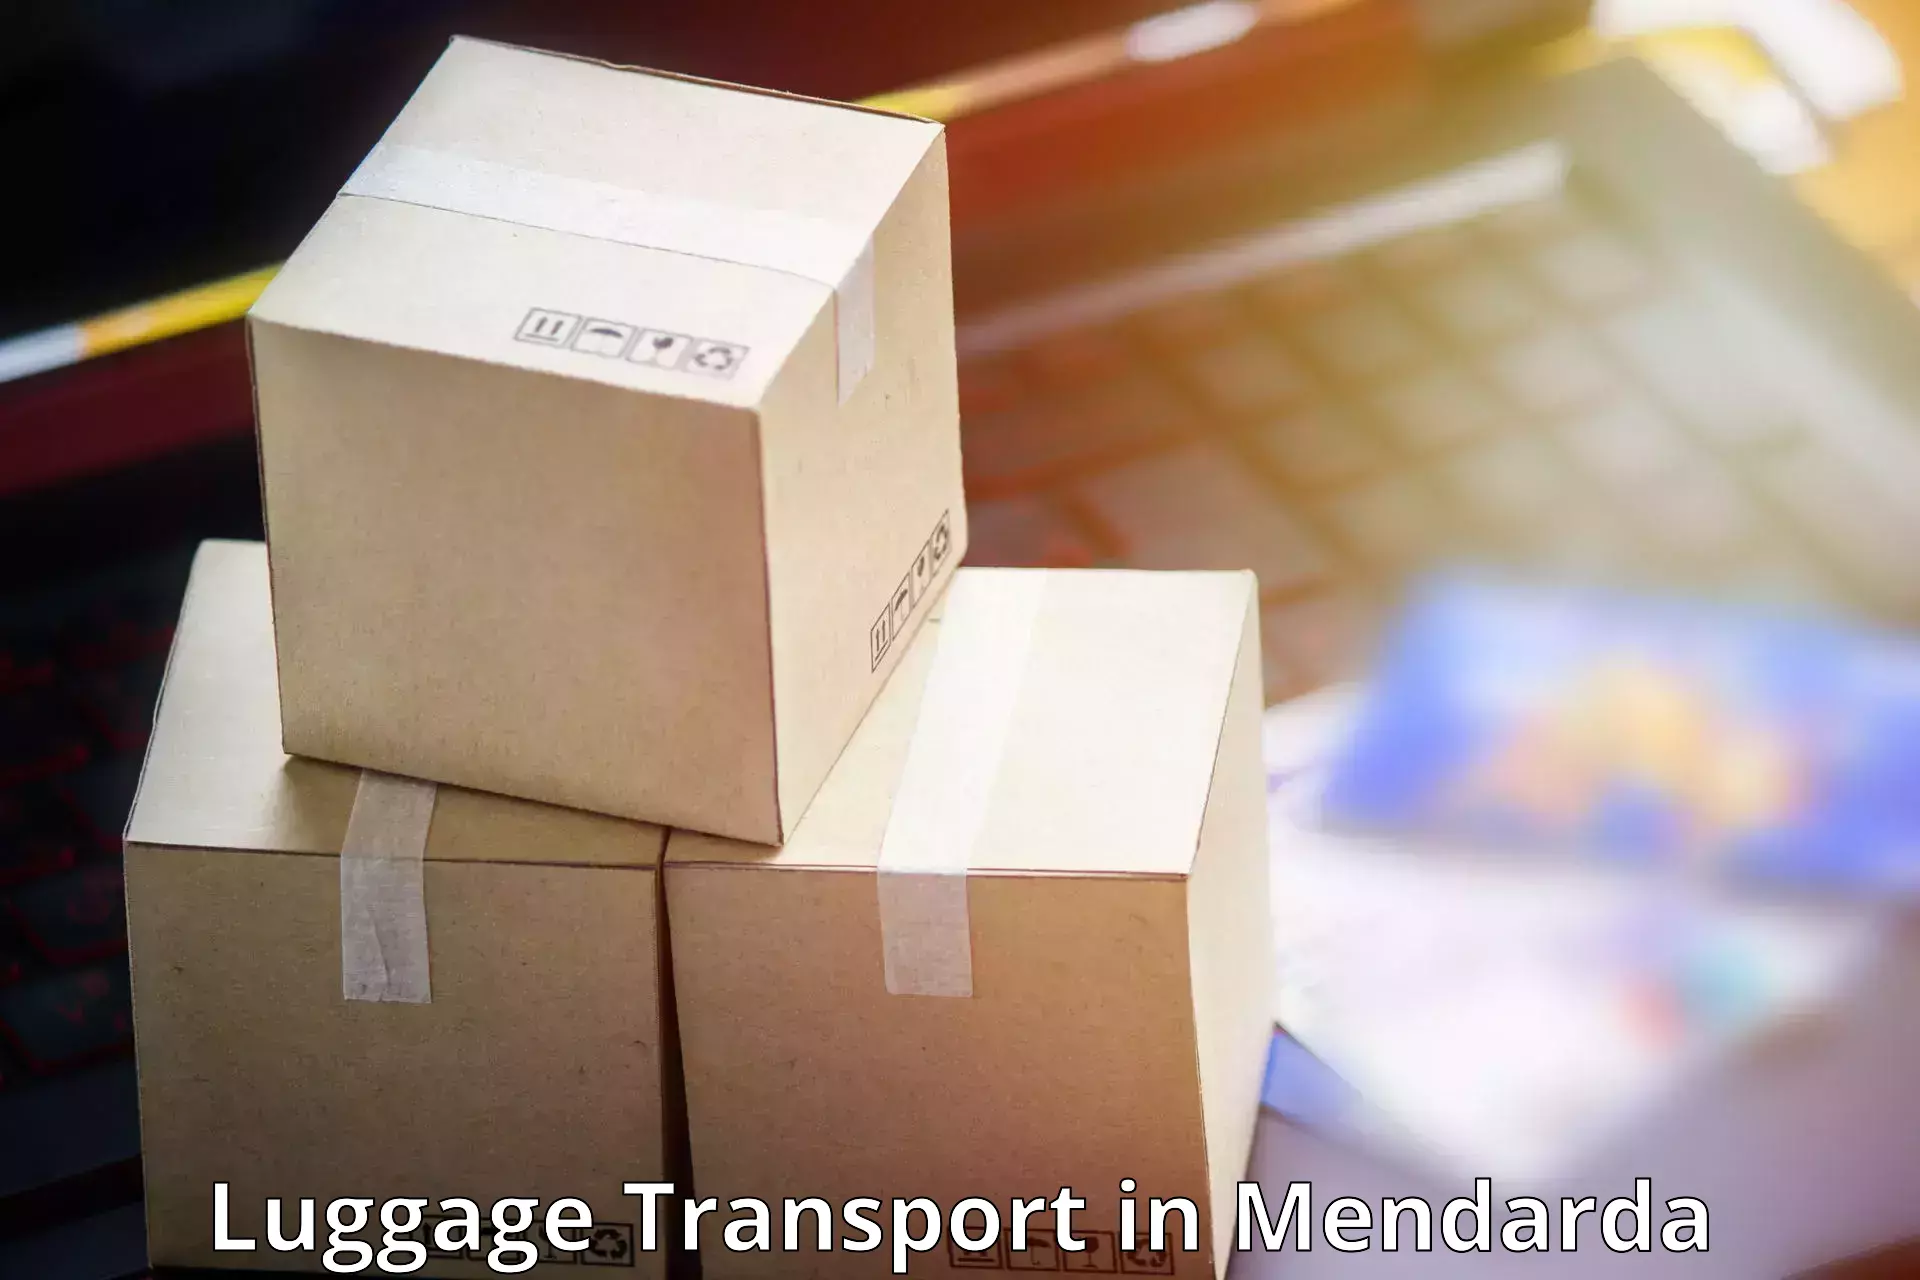 Unaccompanied luggage service in Mendarda